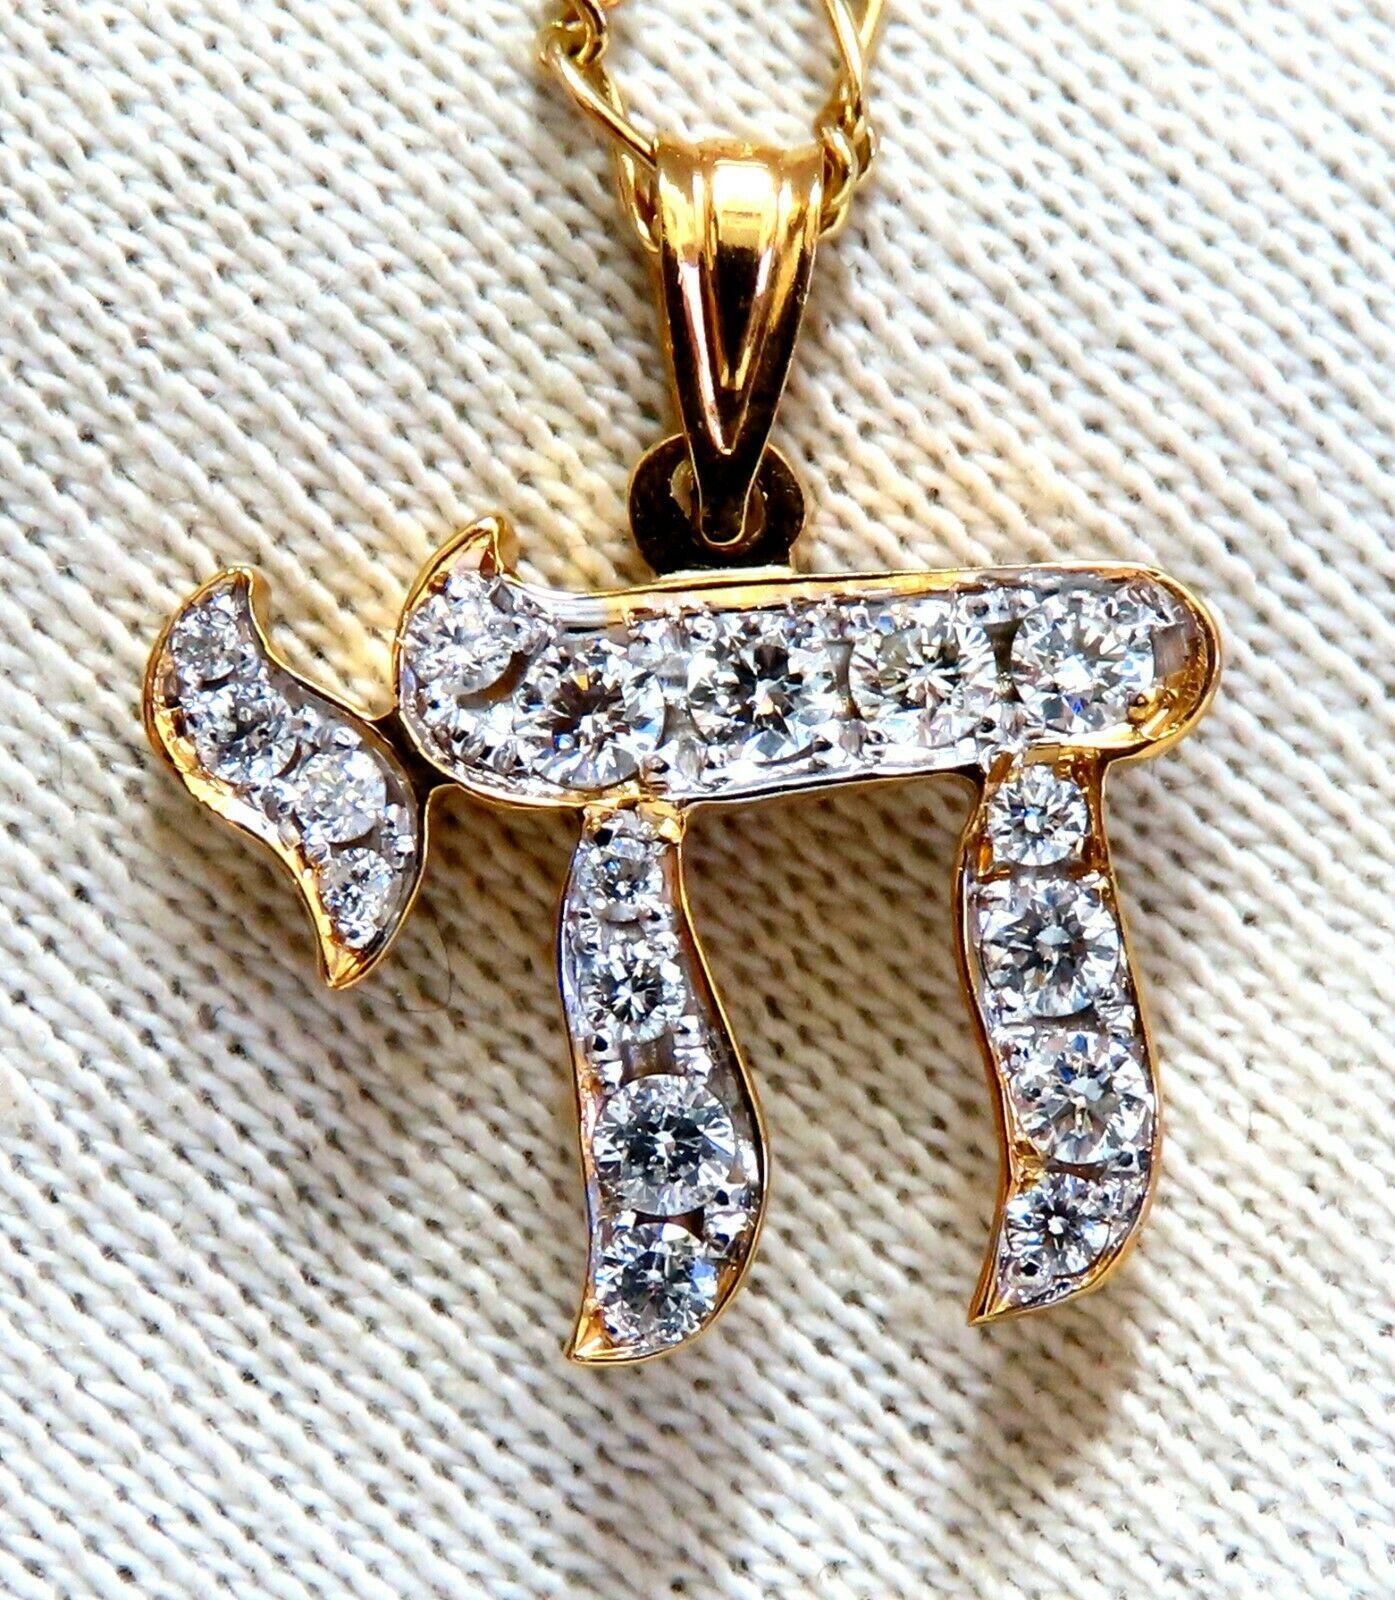 Diamond Chai Pendant & Necklace

Round, Brilliant Cuts.

Diamonds: 1.26ct. 

Vs-2 clarity, G-color

14kt. yellow gold 

Solid Pendant

Pendant Measures: 22 x 19mm

7.6 grams.